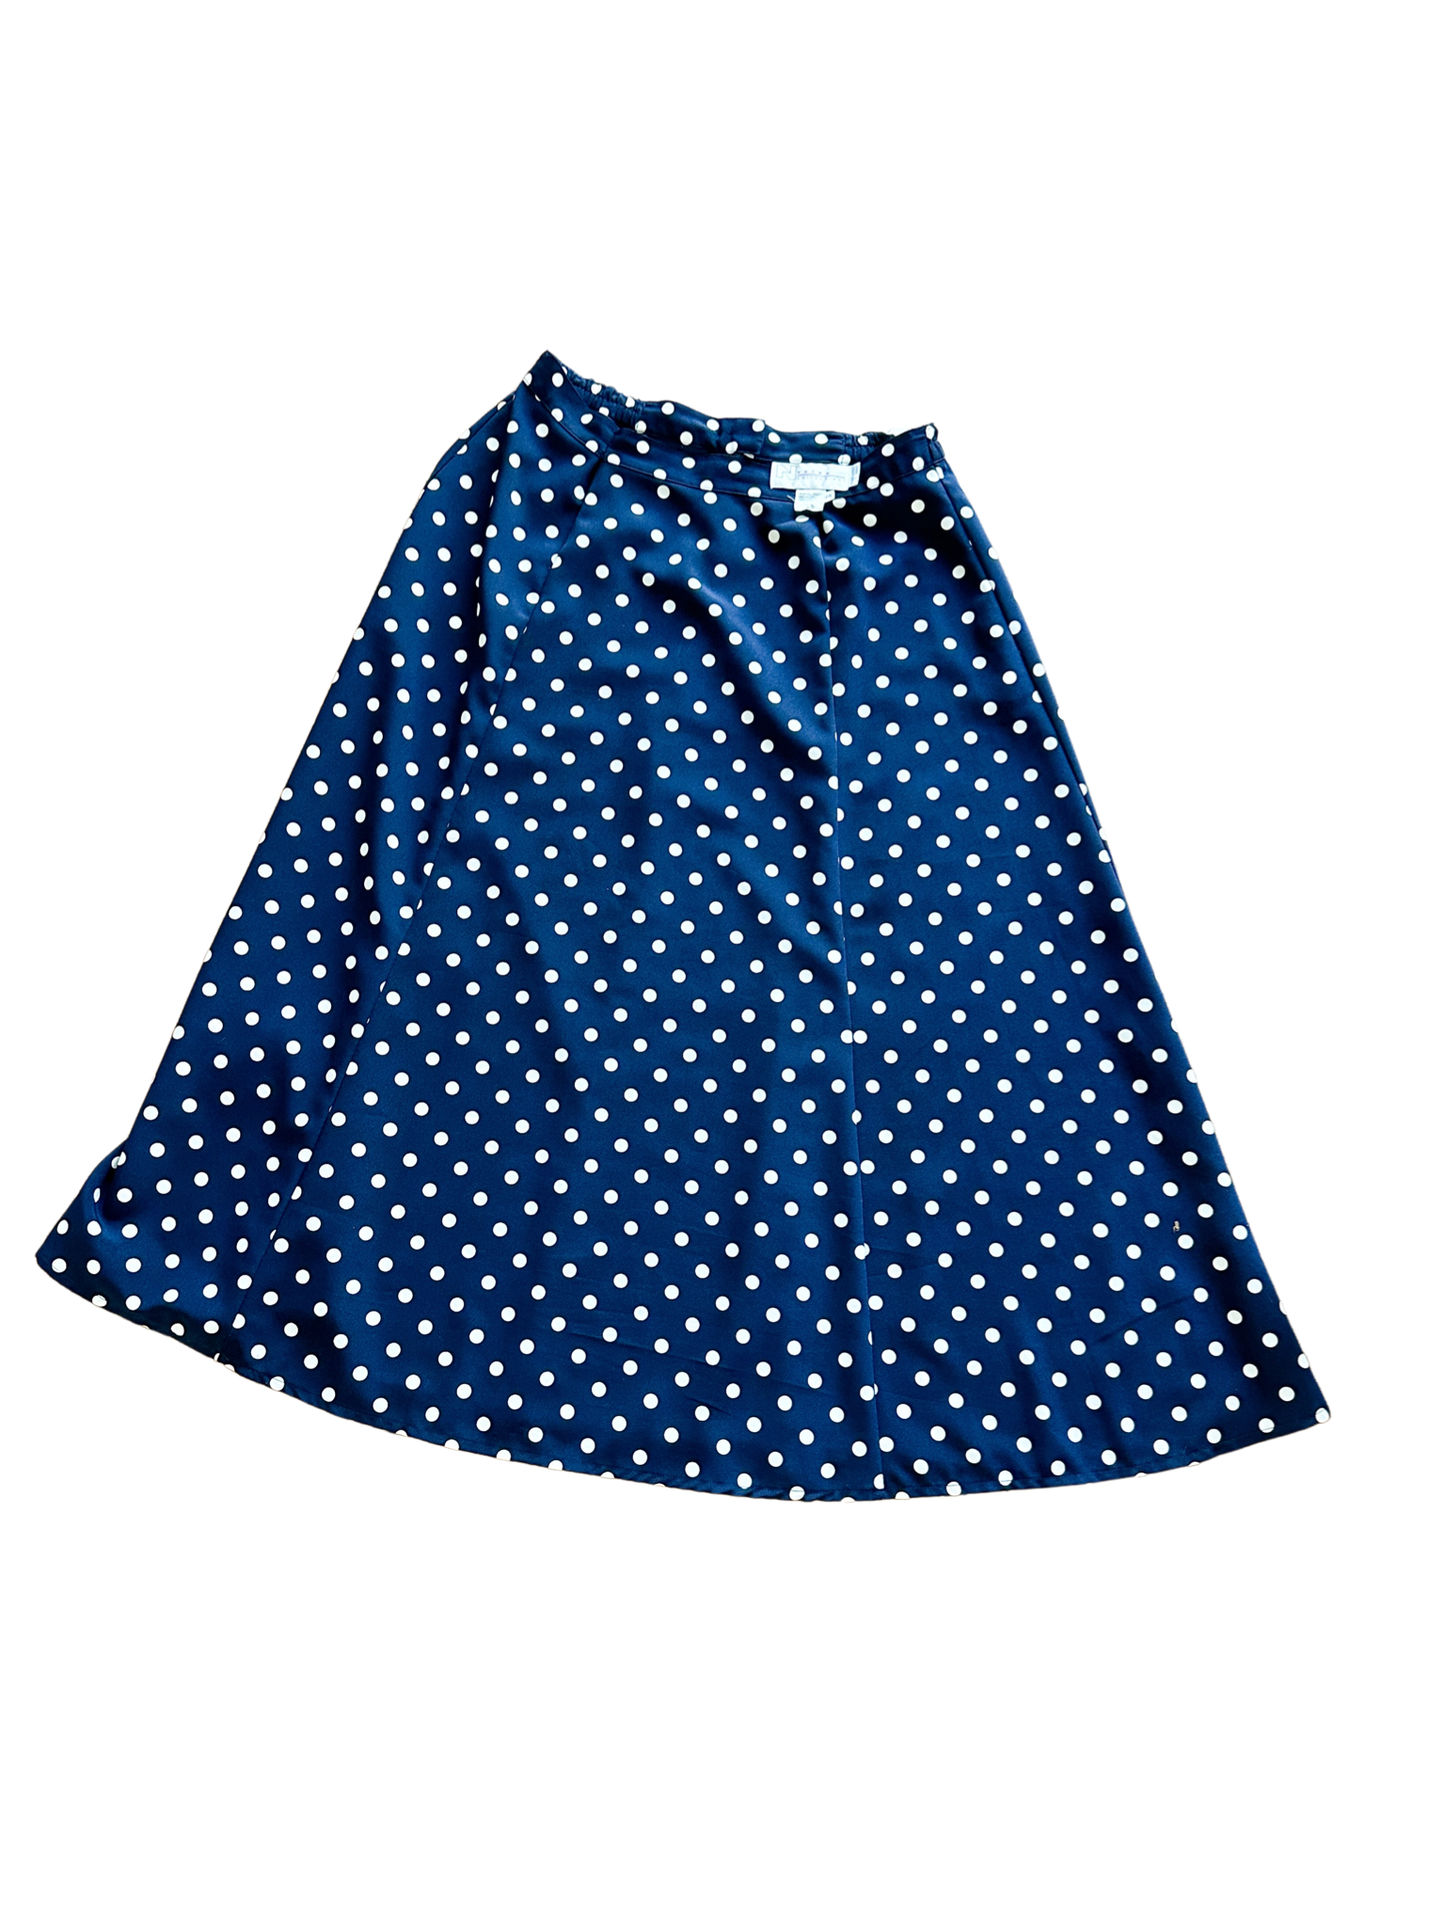 Vintage Nygaard Navy Blue Polka Dot ALine Skirt